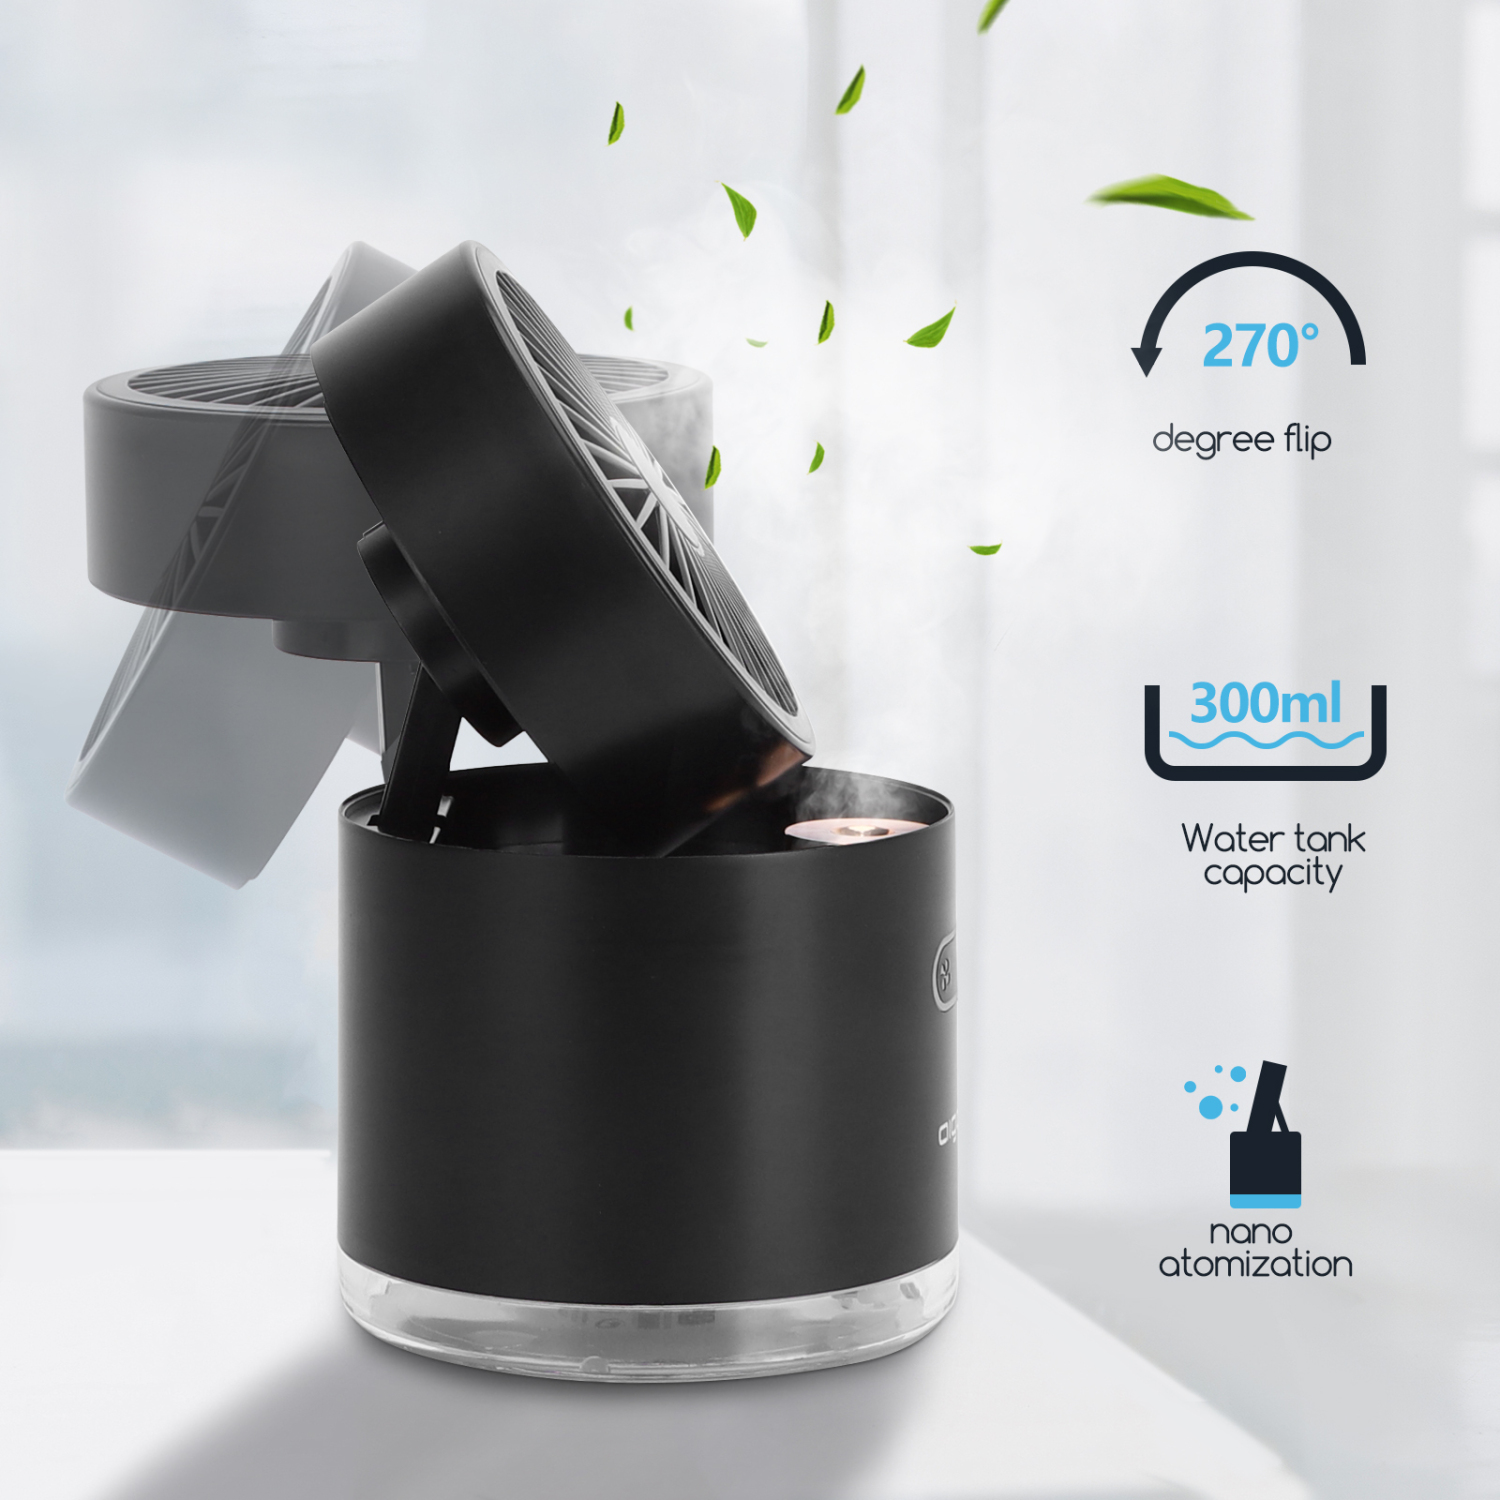 Aigostar Fairy - Mini Ventilador Nebulizador, Depósito 300ml con USB, 3 Velocidades, 7 Colores iluminación. 2 Modos de Pulverización. Ventilador mini humidificador, apagado automático, Negro